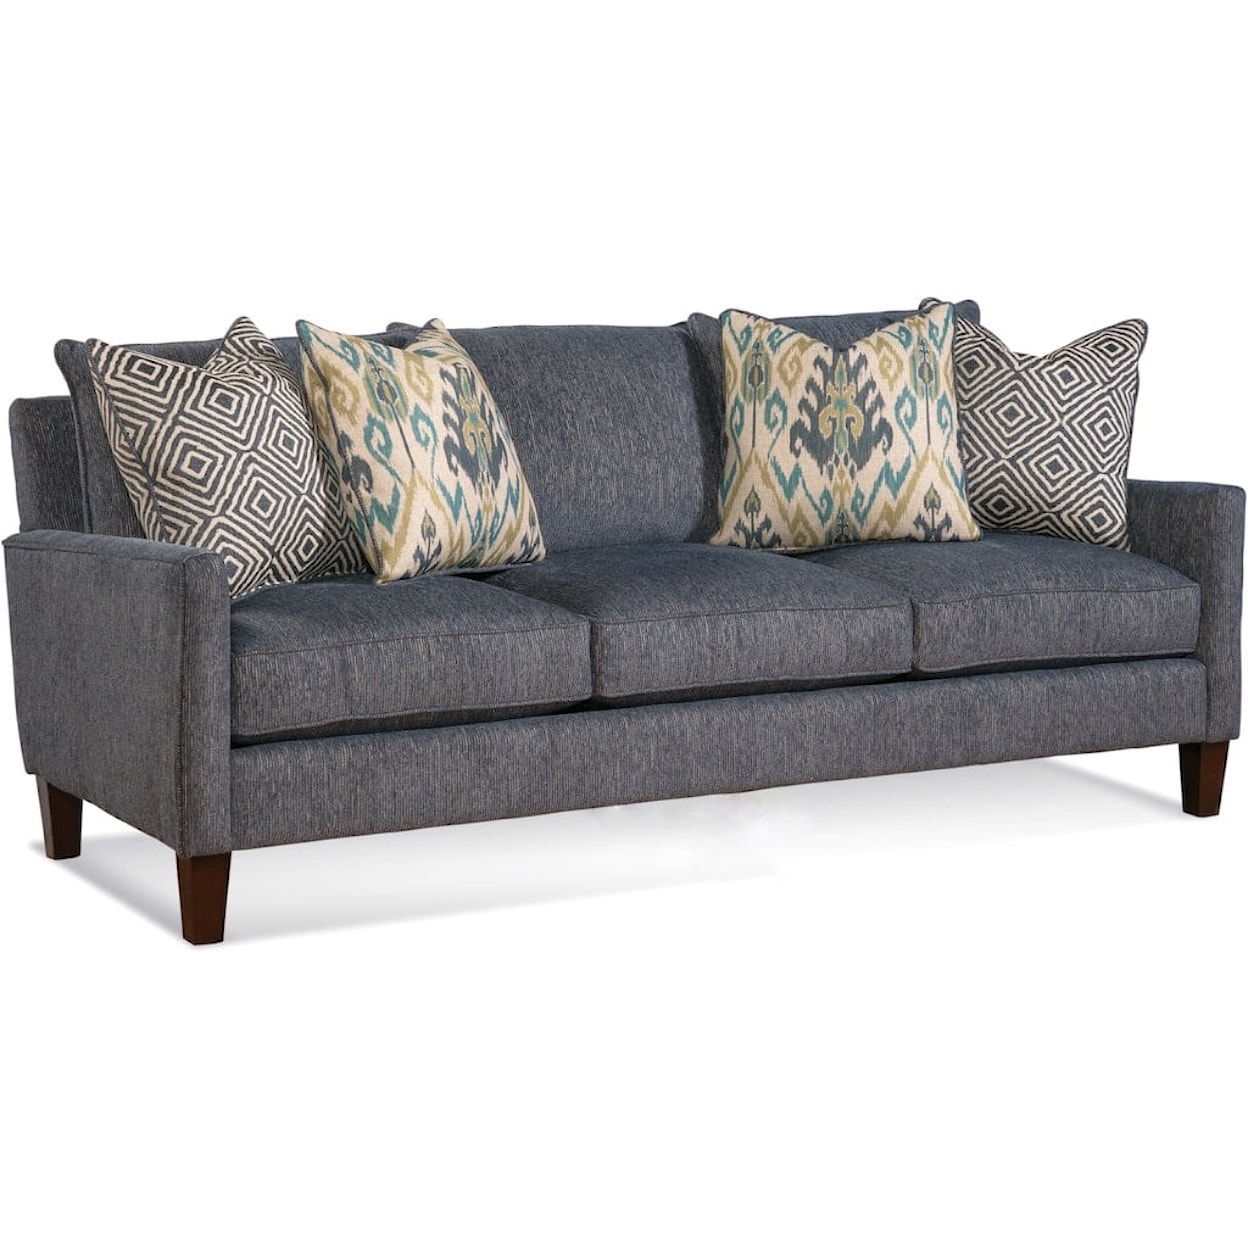 Braxton Culler Urban Options Urban Options Three Cushion Sofa